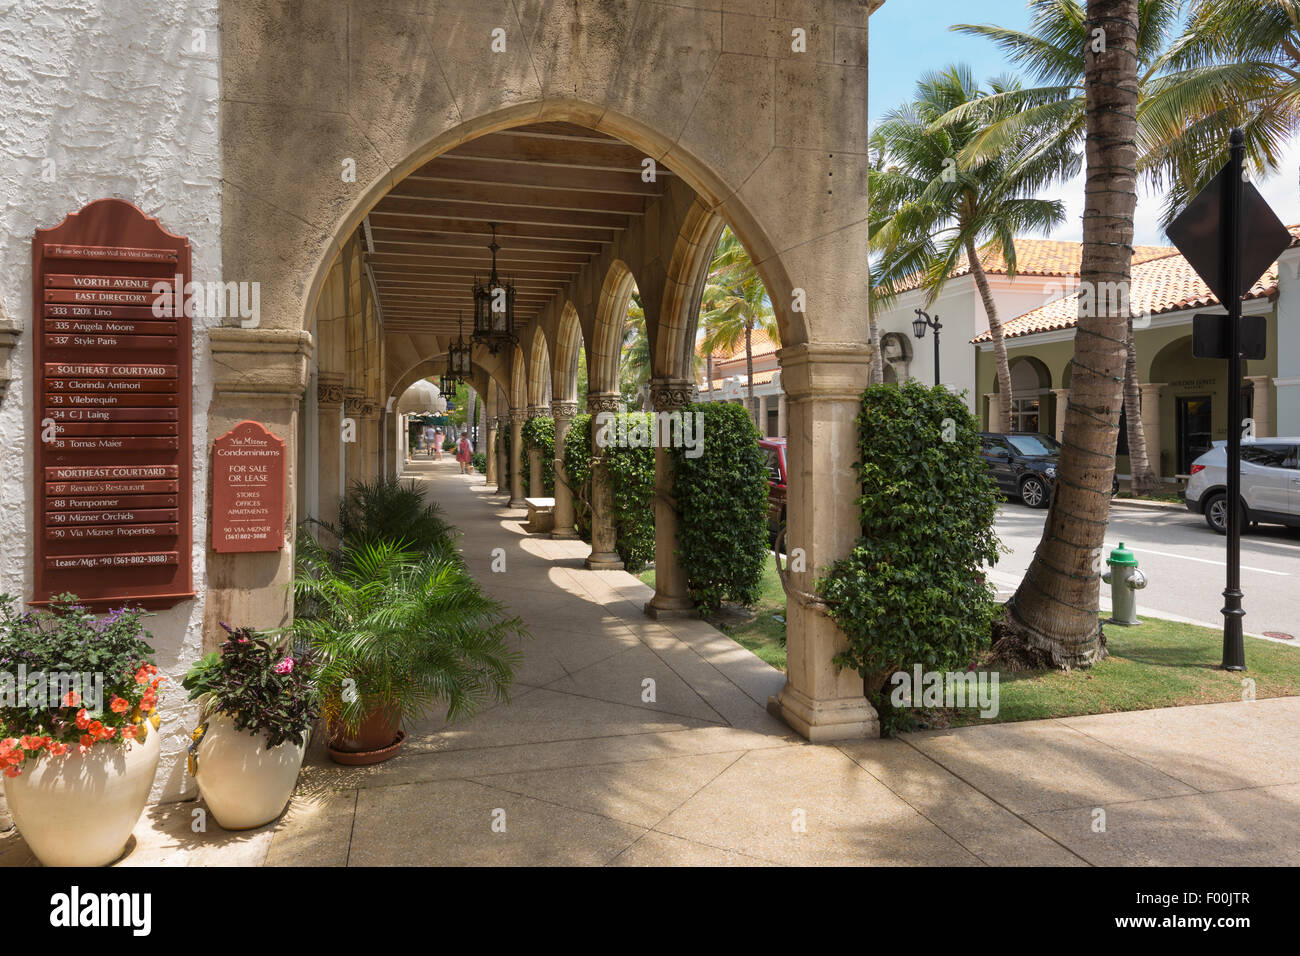 MEDITERRANEAN STYLE SHOPPING ARCADE WORTH AVENUE PALM BEACH FLORIDA USA Stock Photo